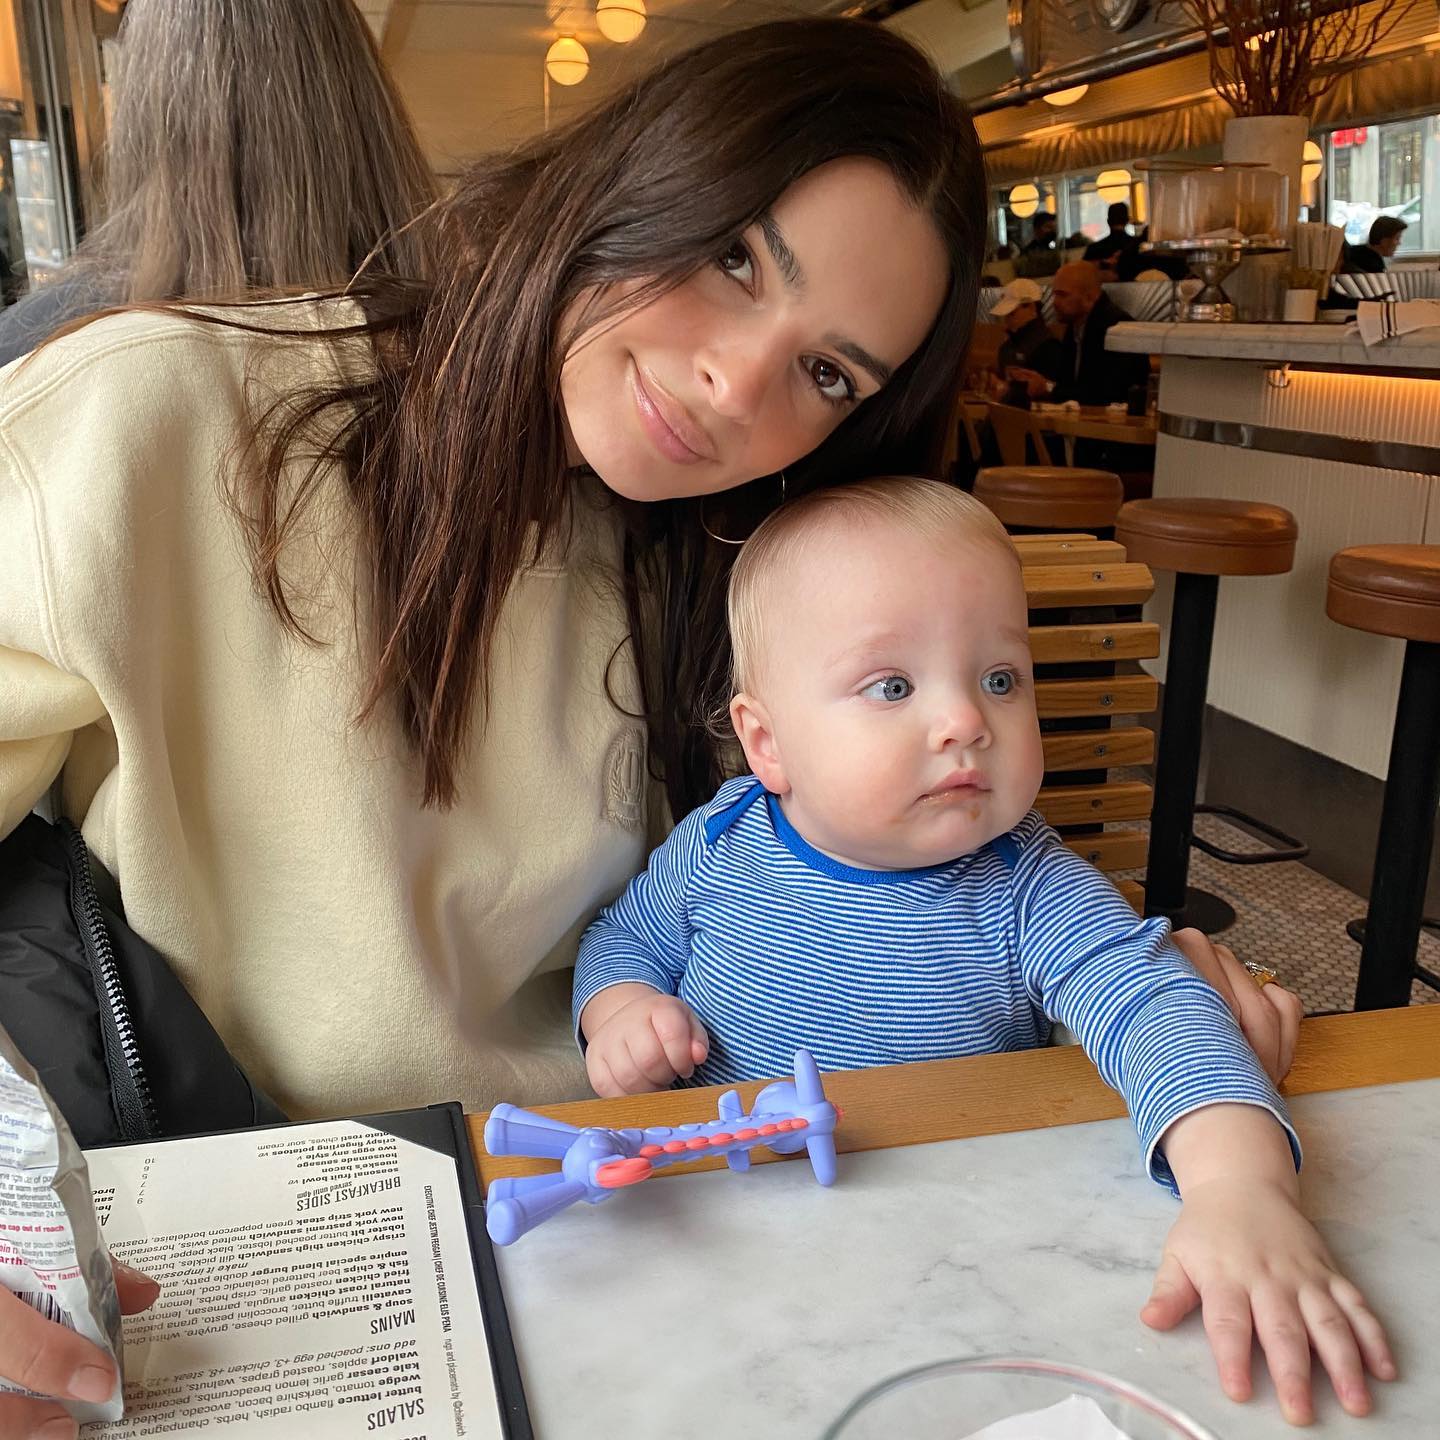 Emily Ratajkowski with her cute child